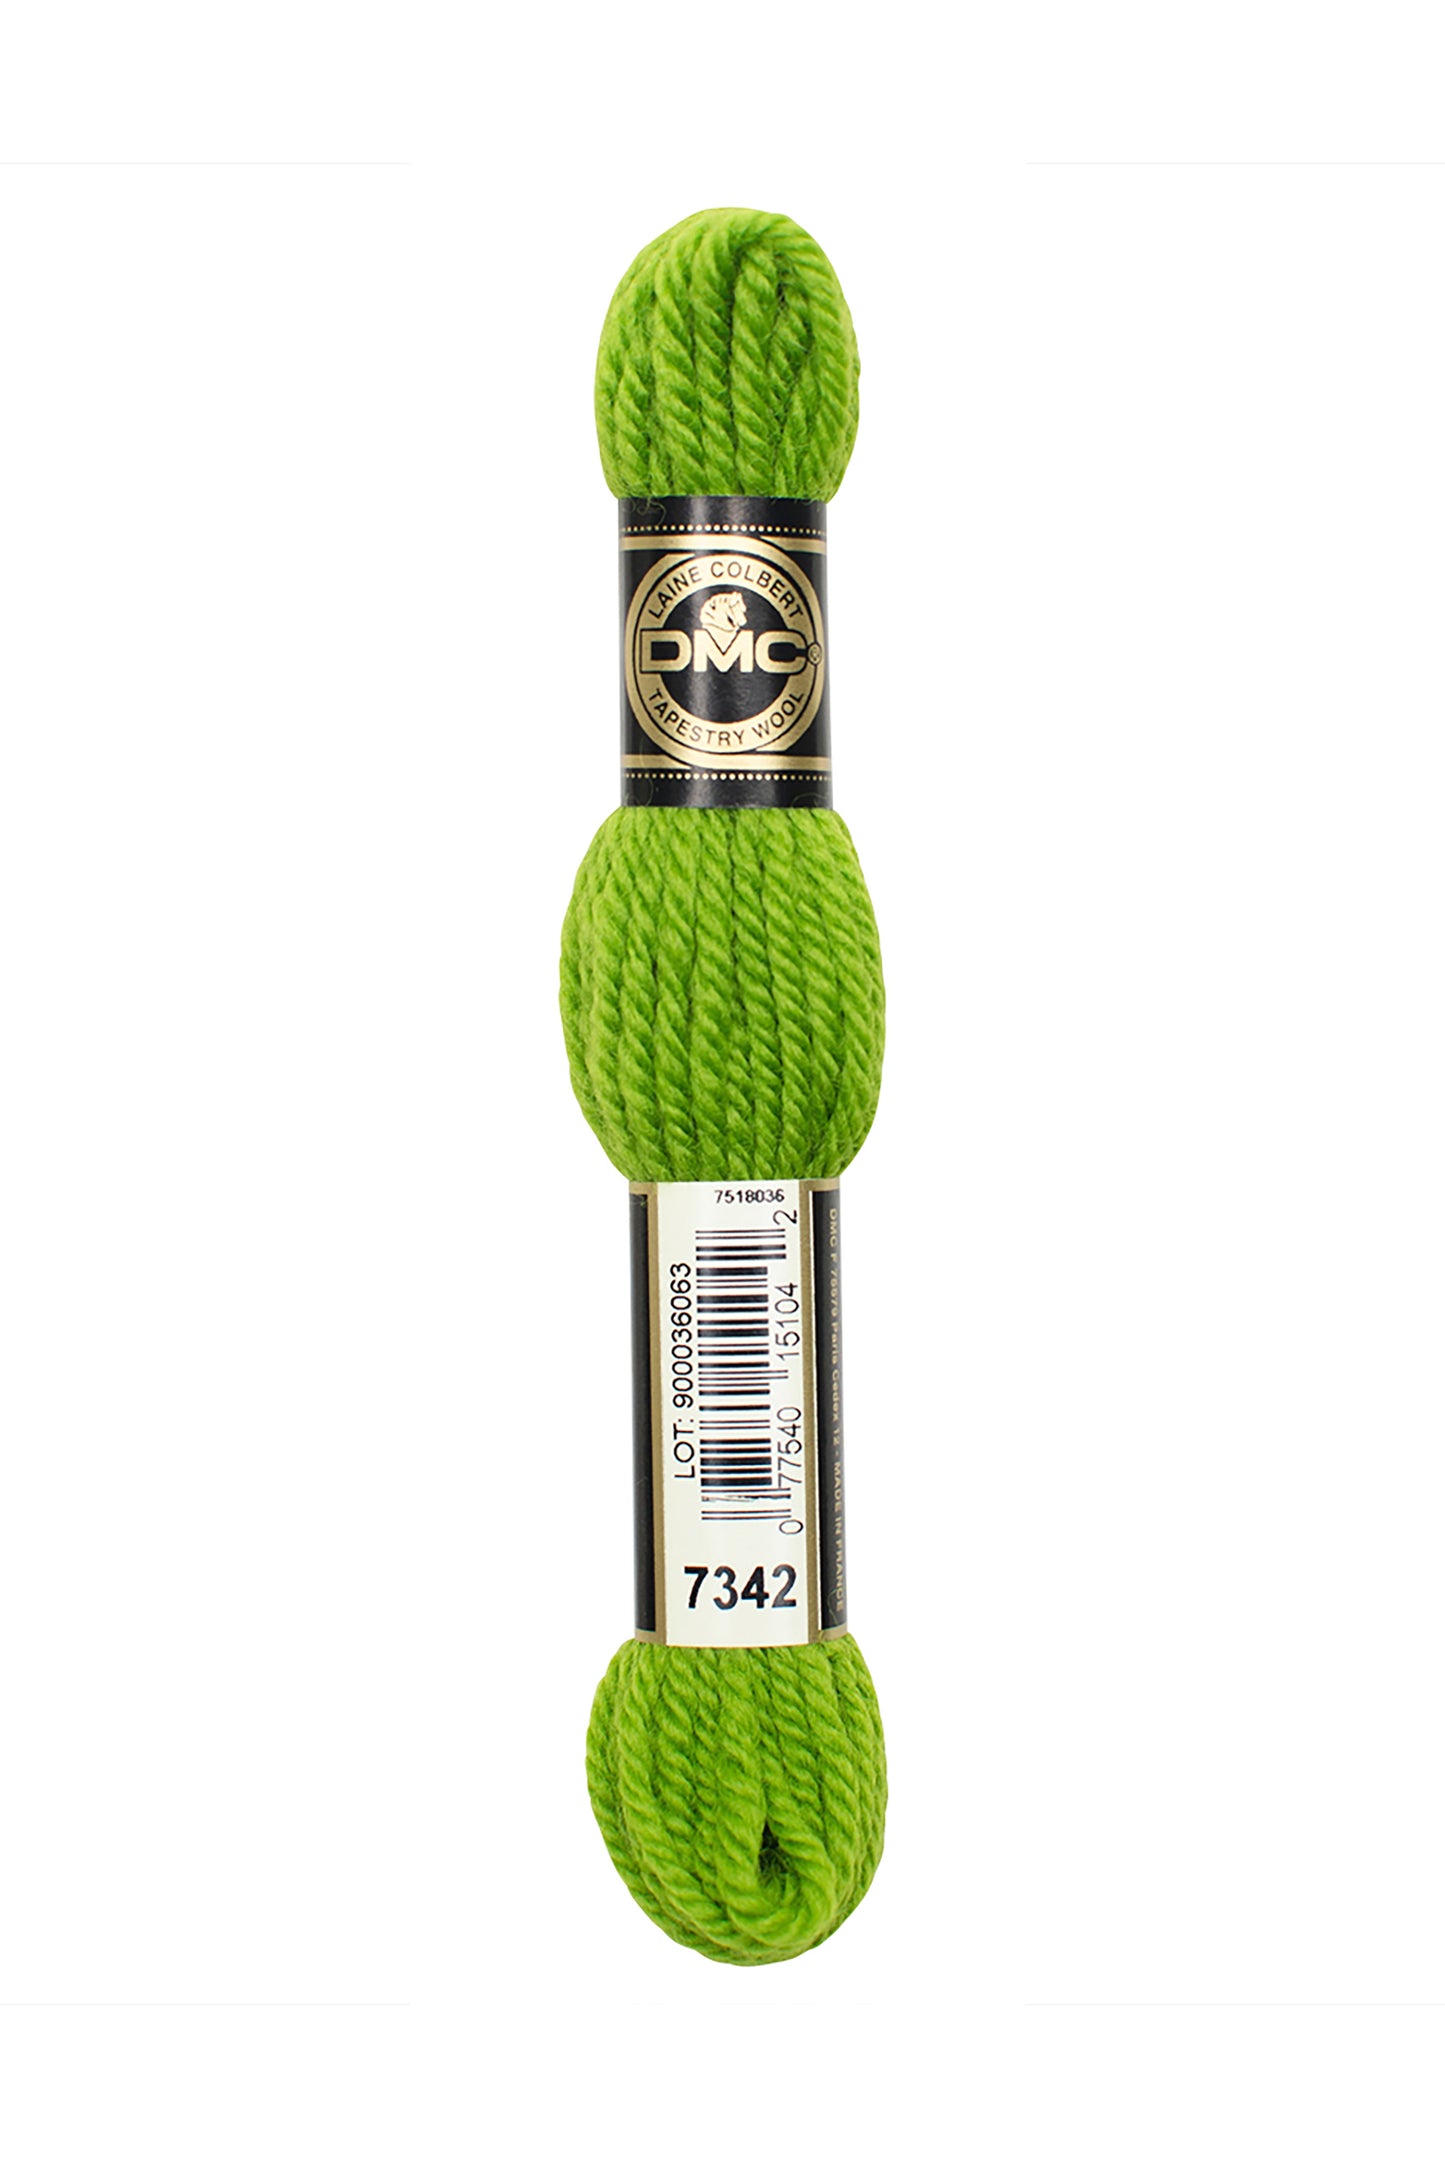 7342 – DMC Tapestry Wool